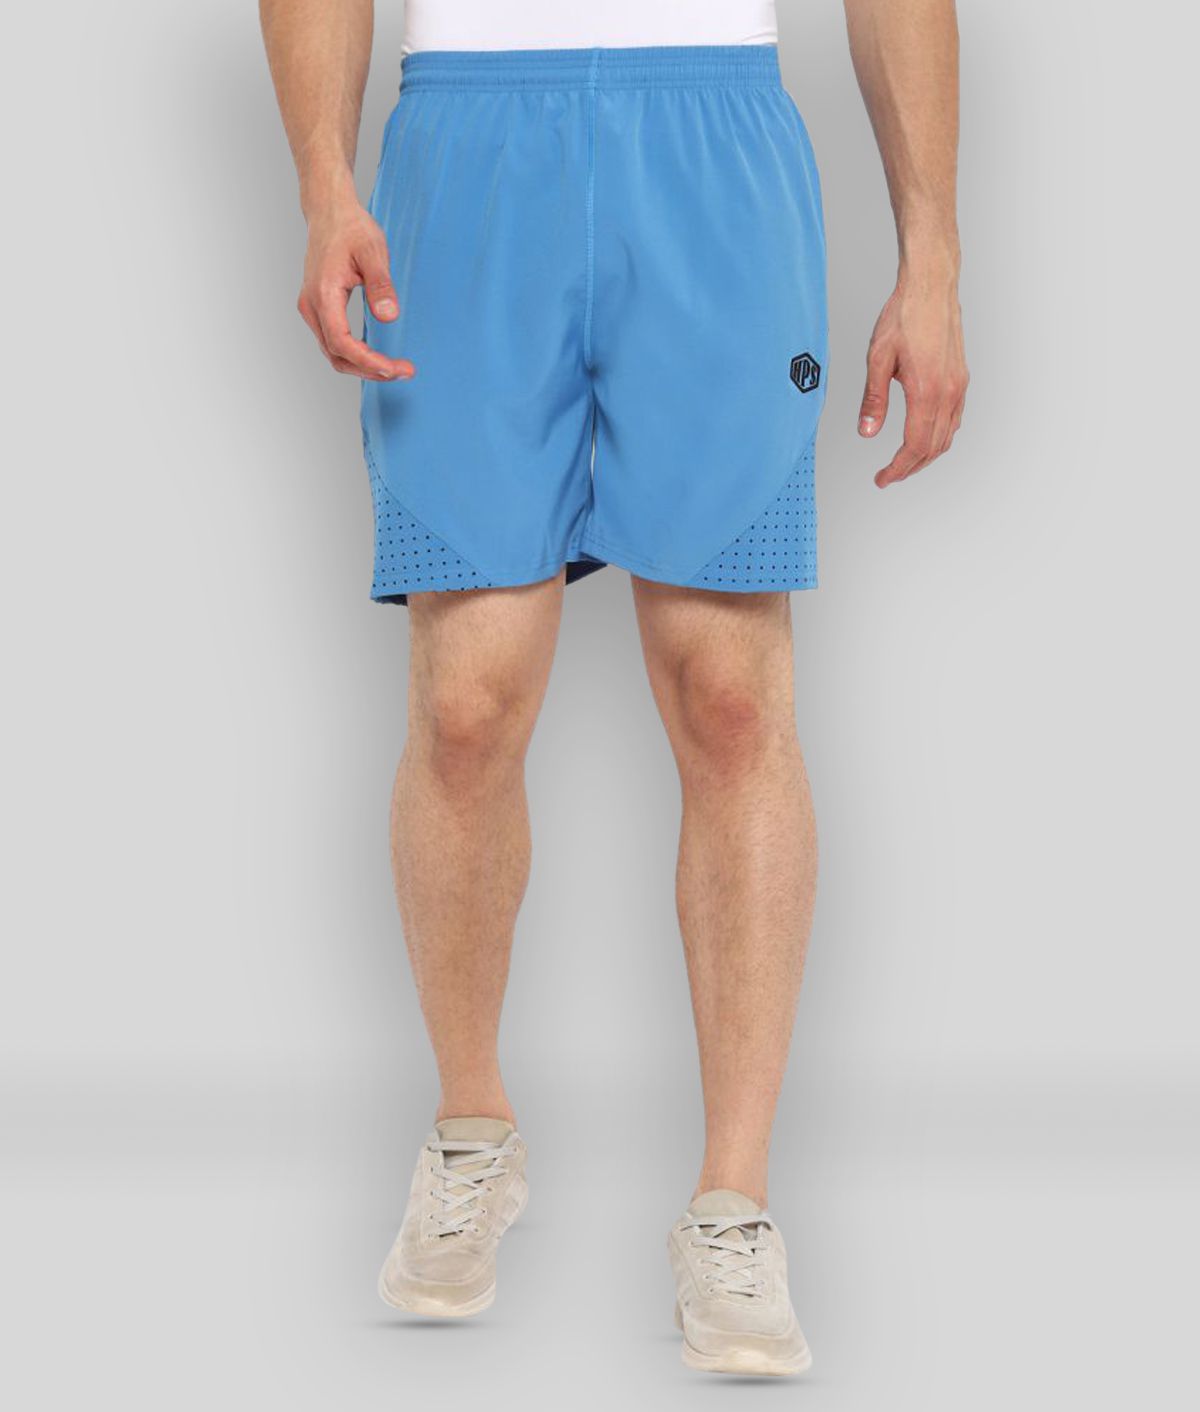 HPS Sports - Blue Polyester Men's Shorts ( Pack of 1 )